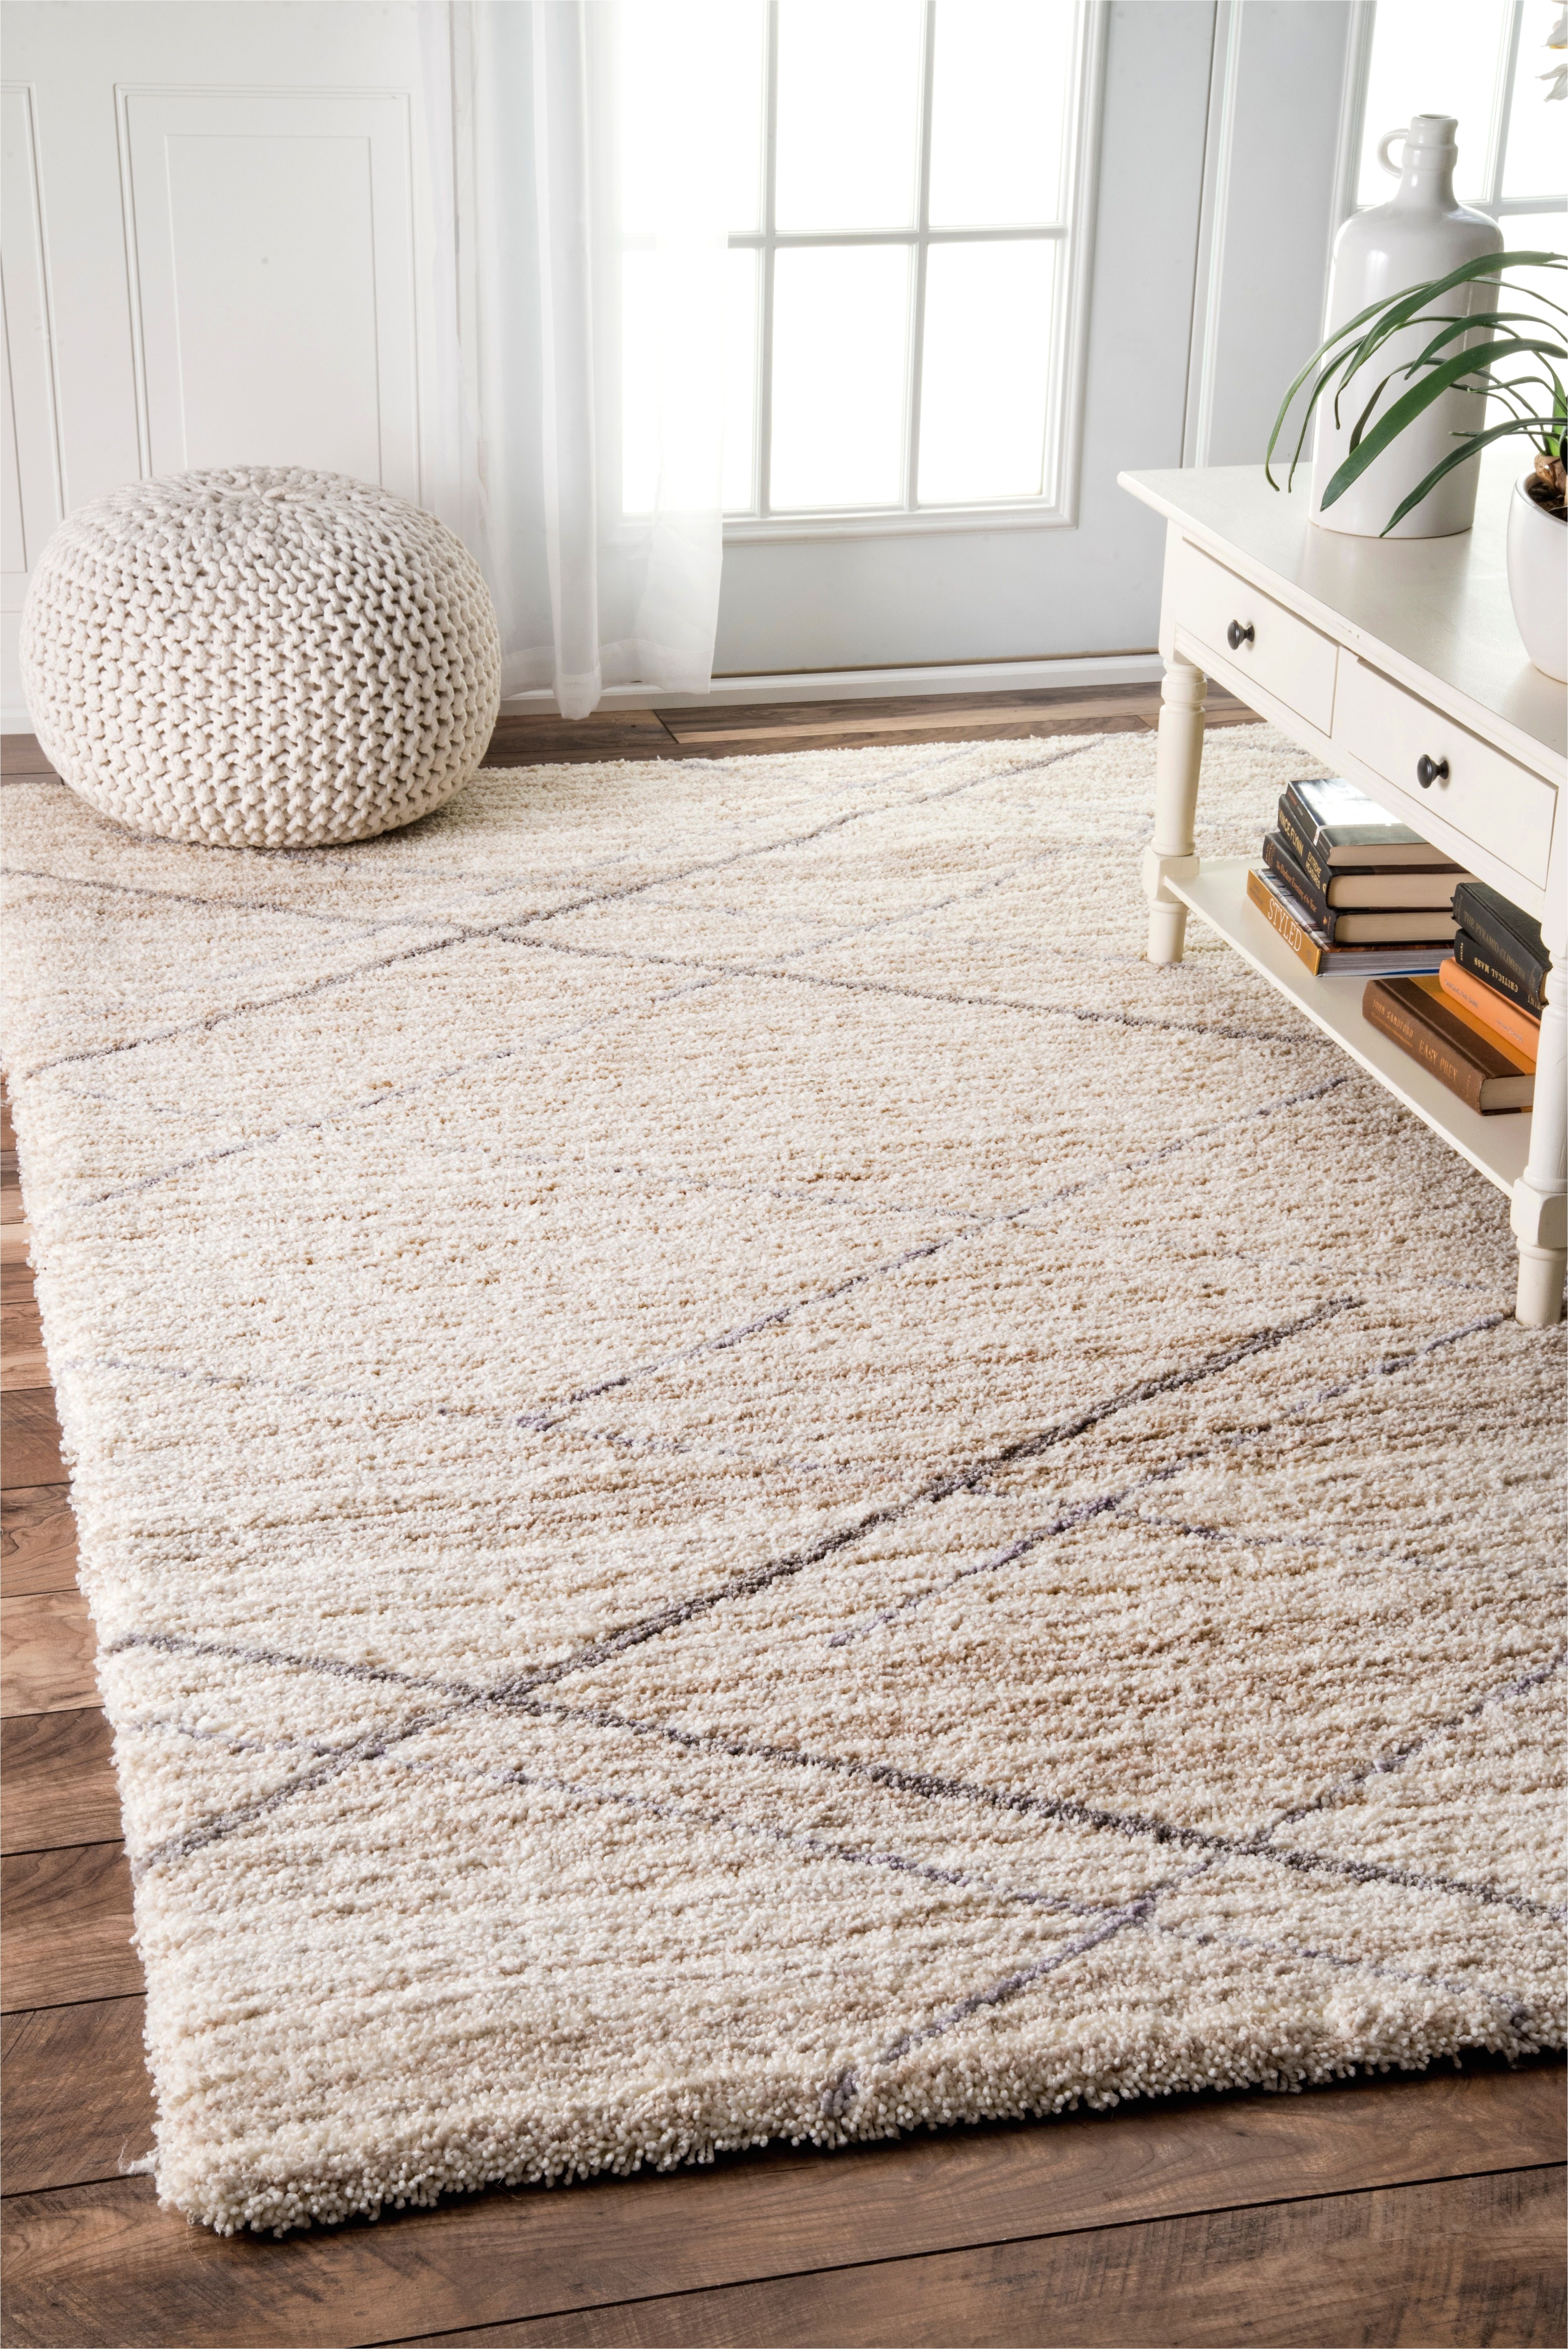 how to buy an area rug for living room unique rugs usa snowpeak diamond trellis shag